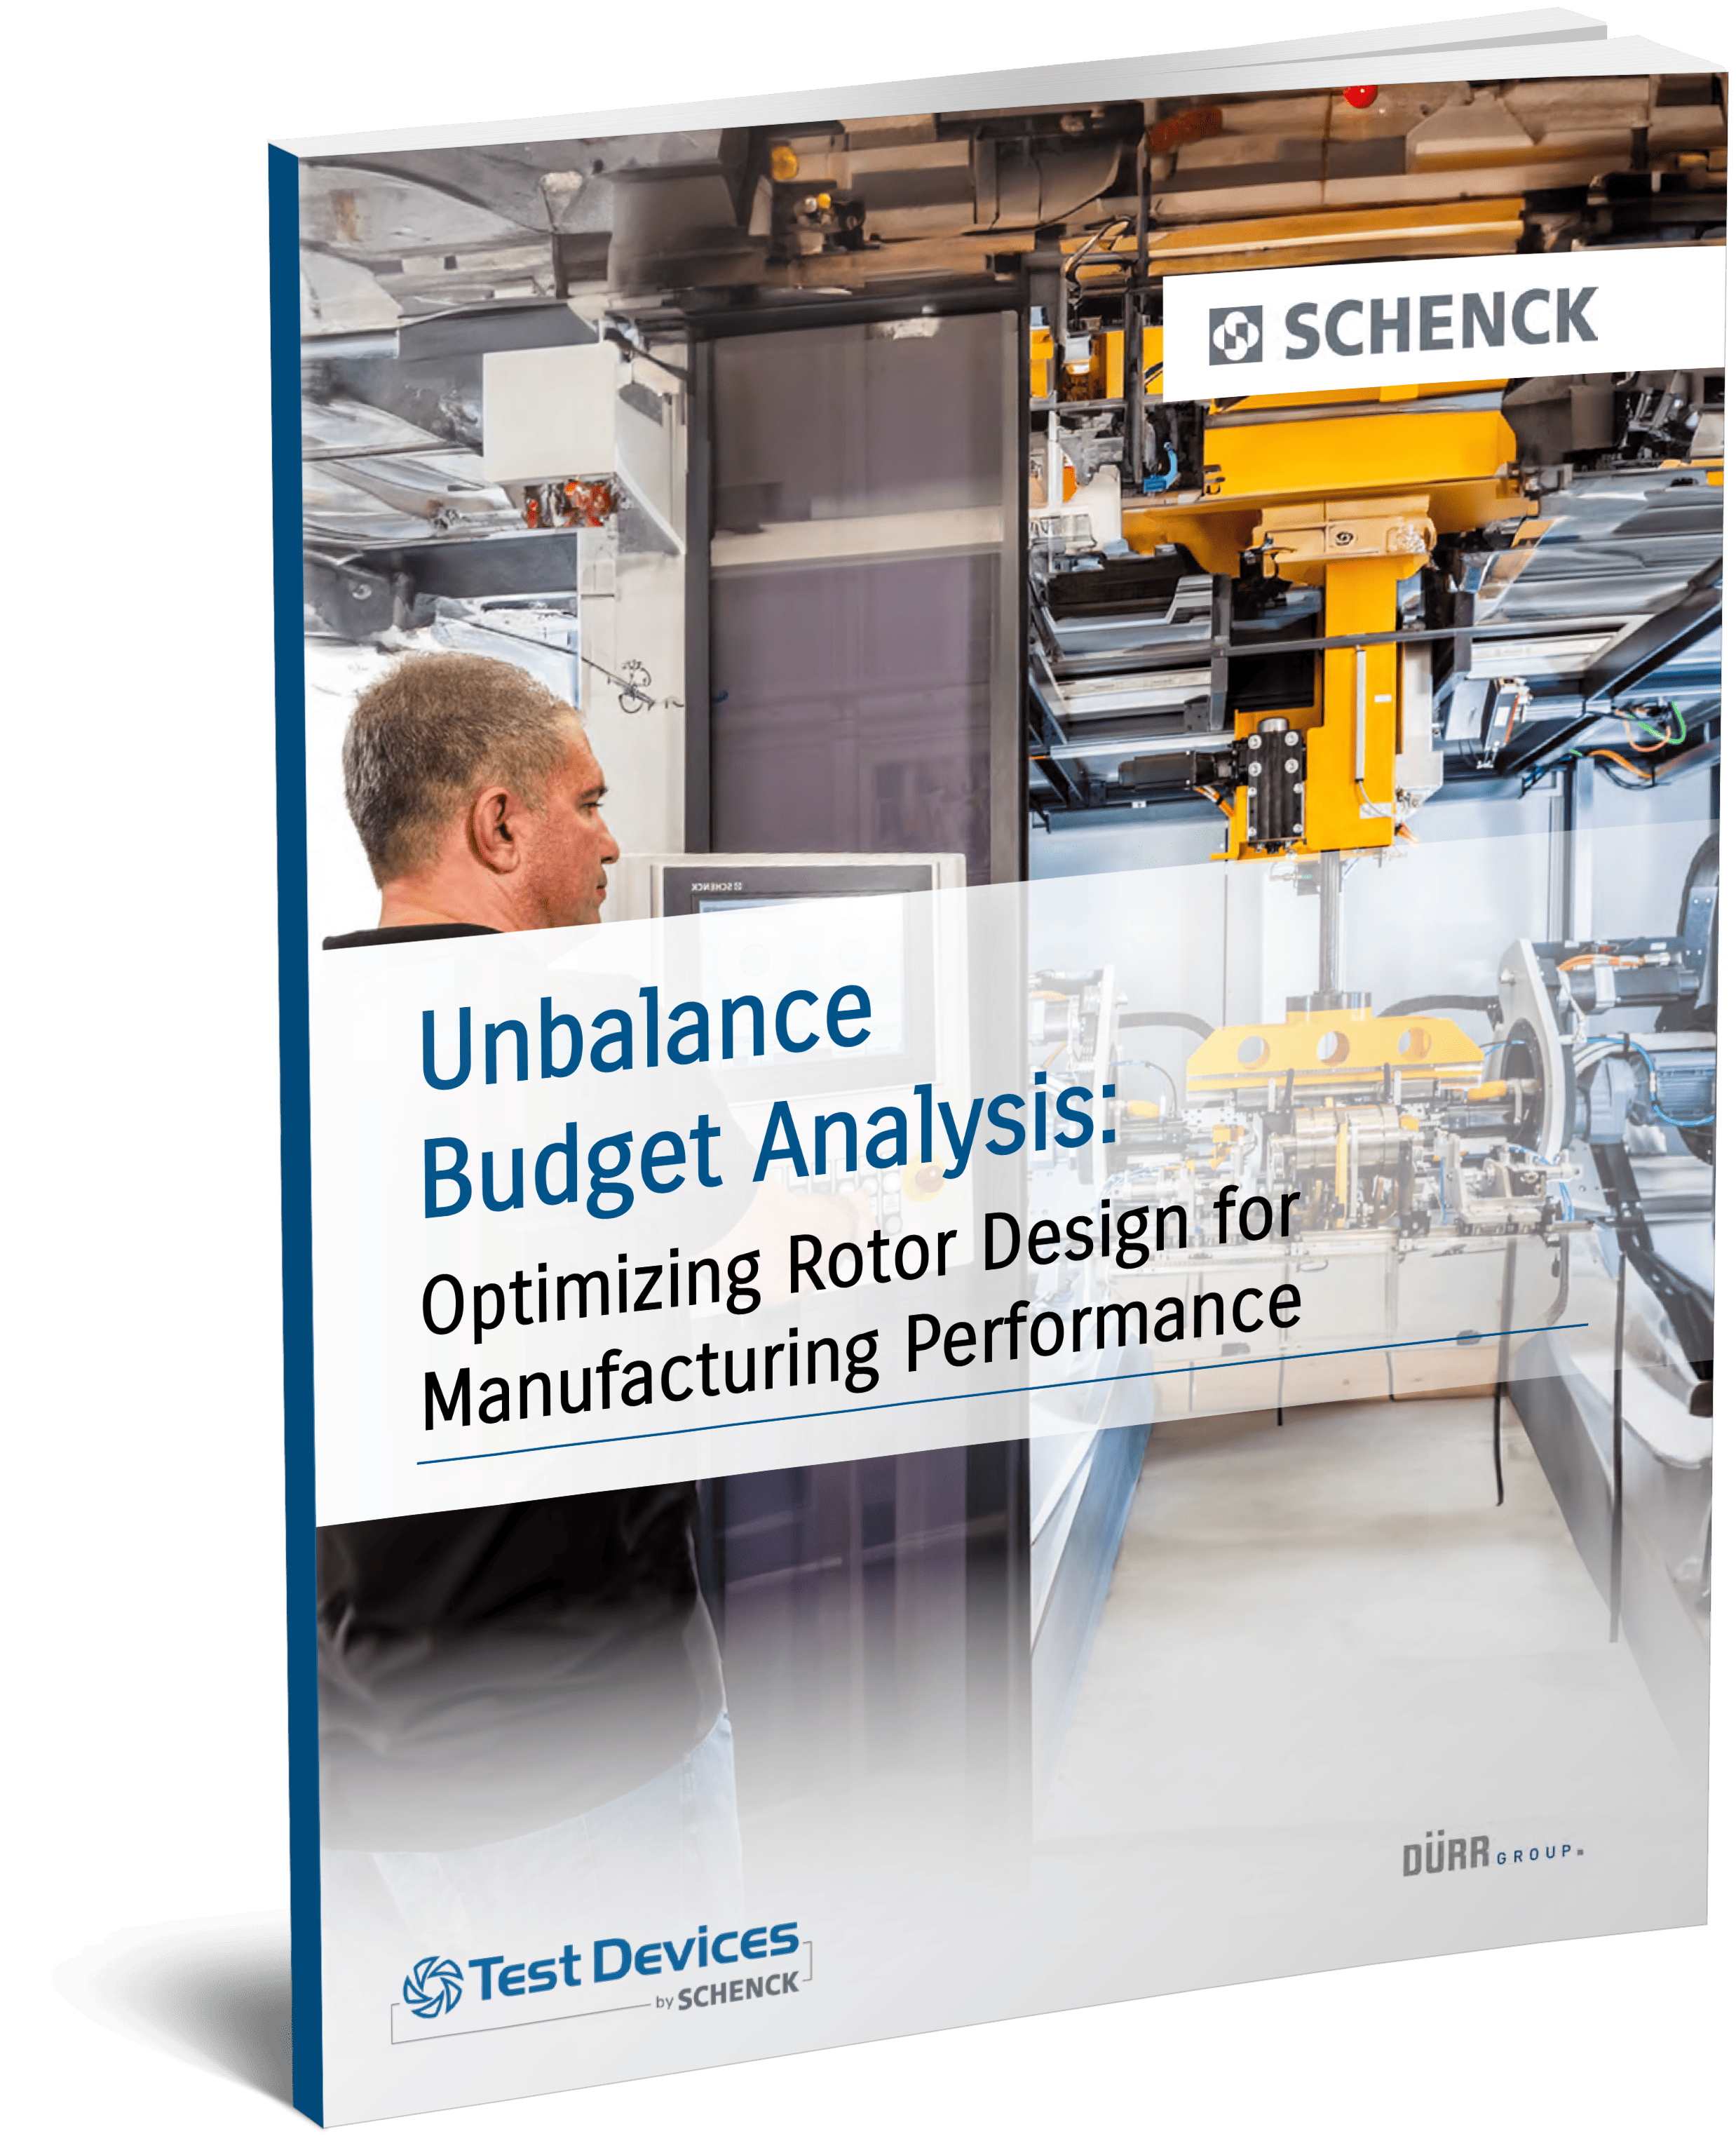 Unbalance Budget Analysis Optimizing Rotor Design for Manufacturing Performance